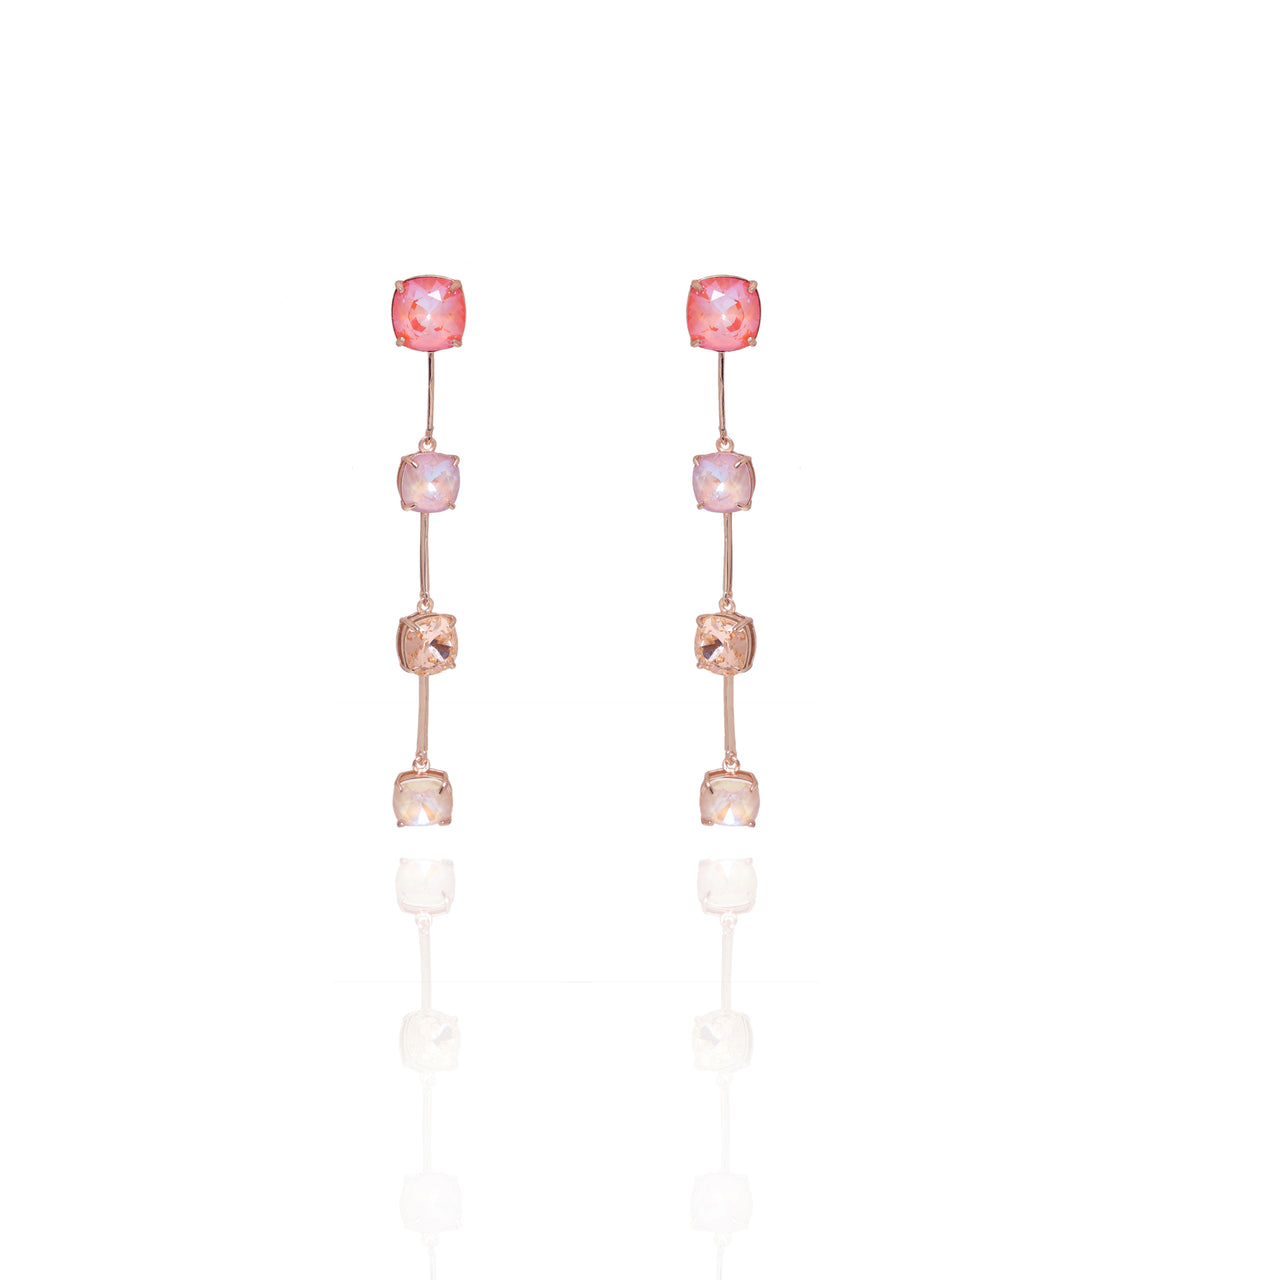 Pink round stone drop earrings